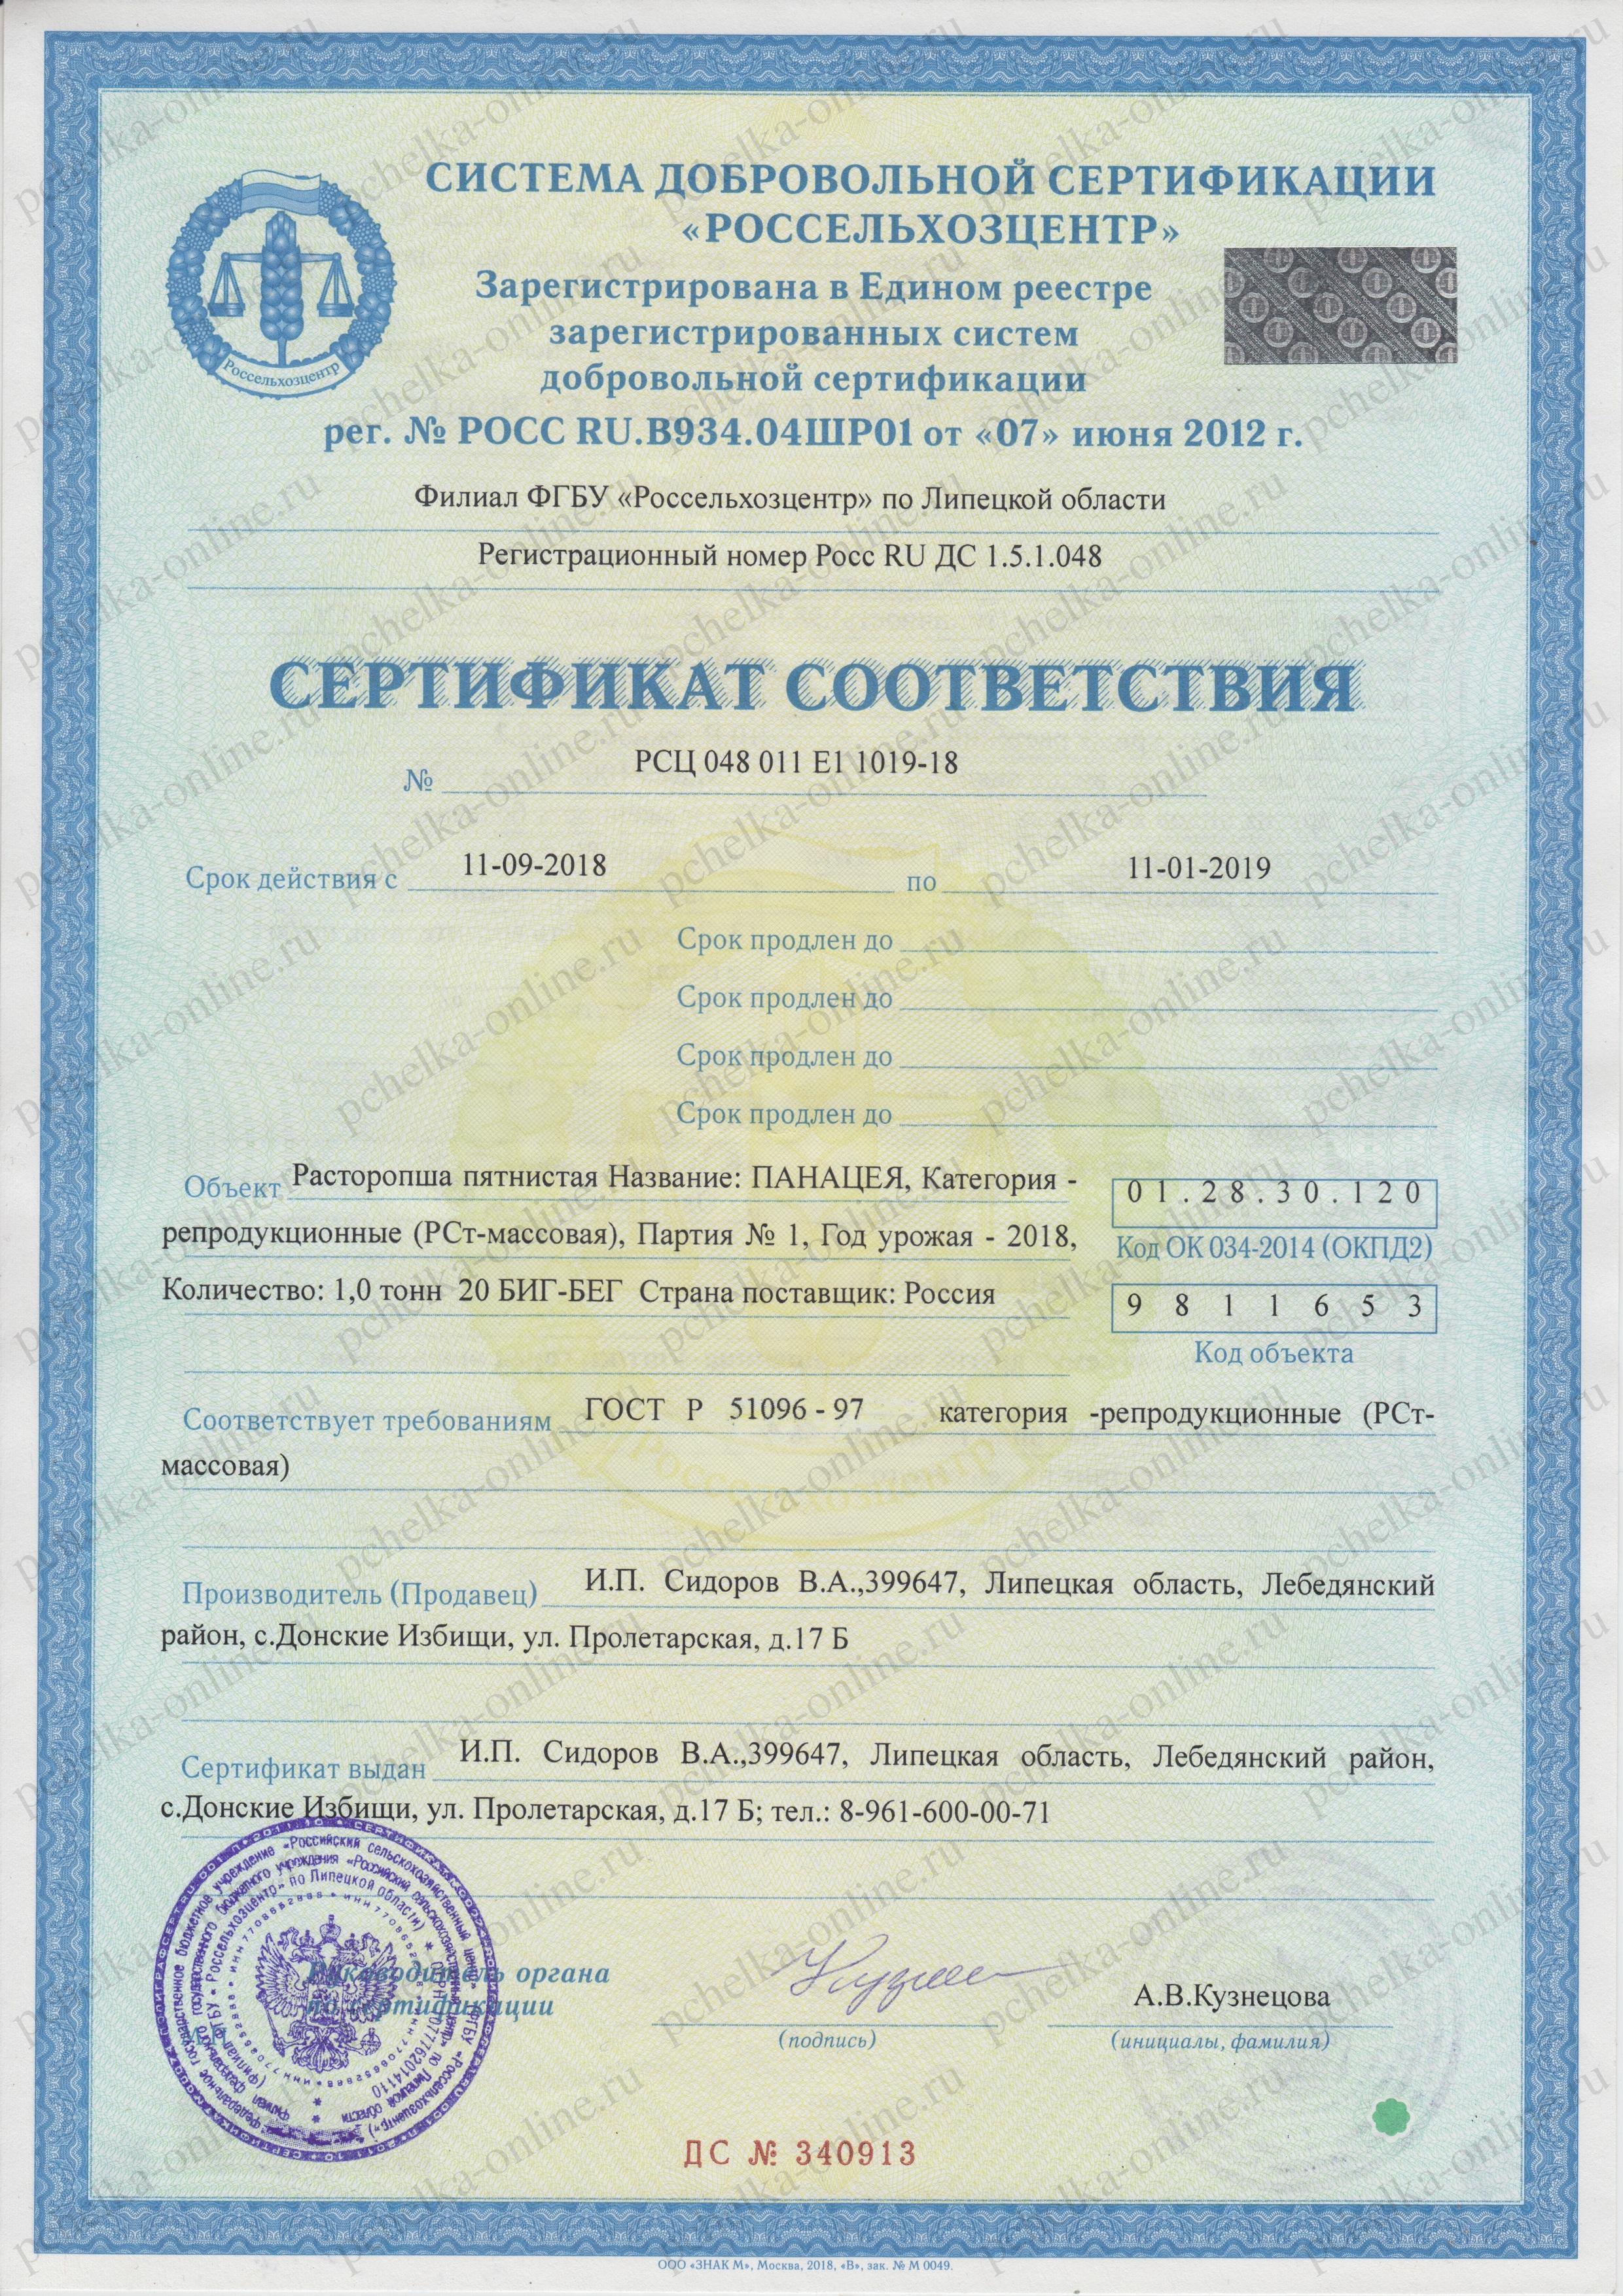 Сертификат_соответствия_расторопша_2016-2017_стр1_watermark2.jpg